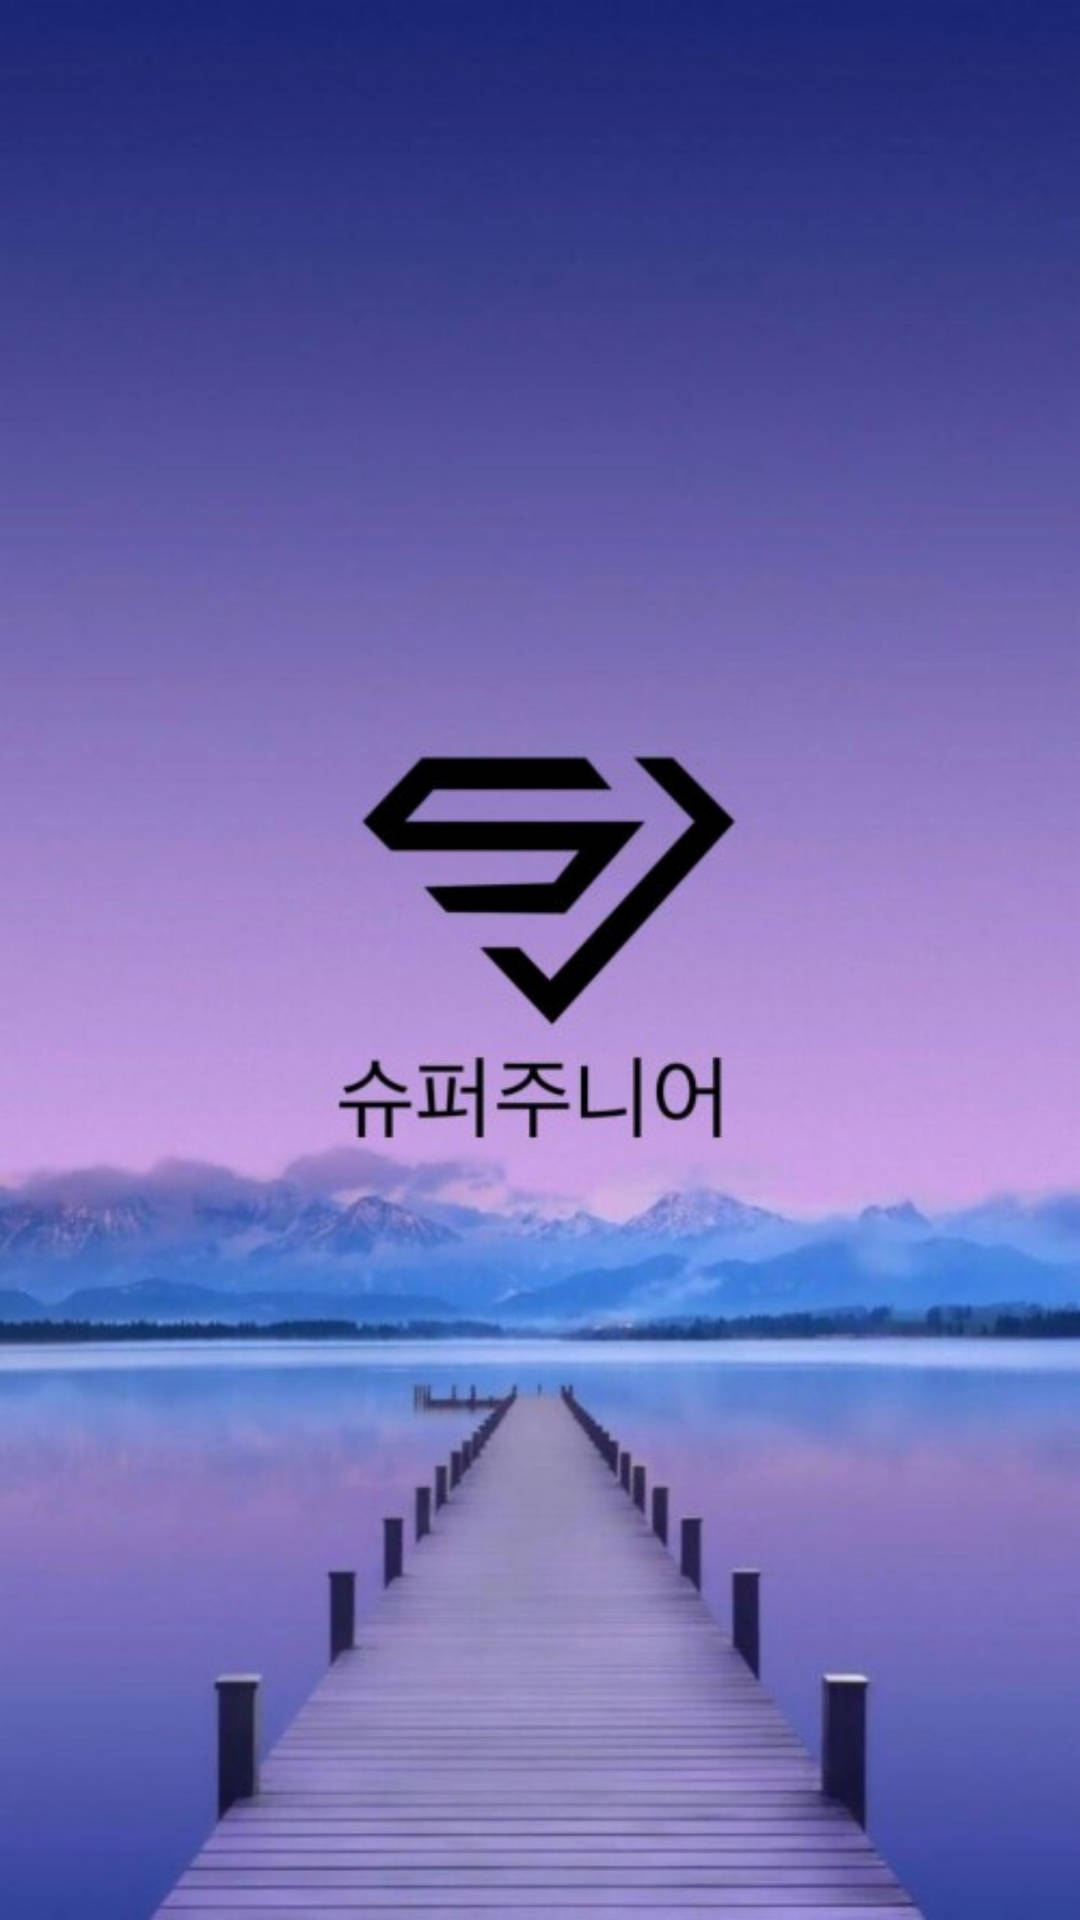 Superjunior Bridge Logotyp Wallpaper